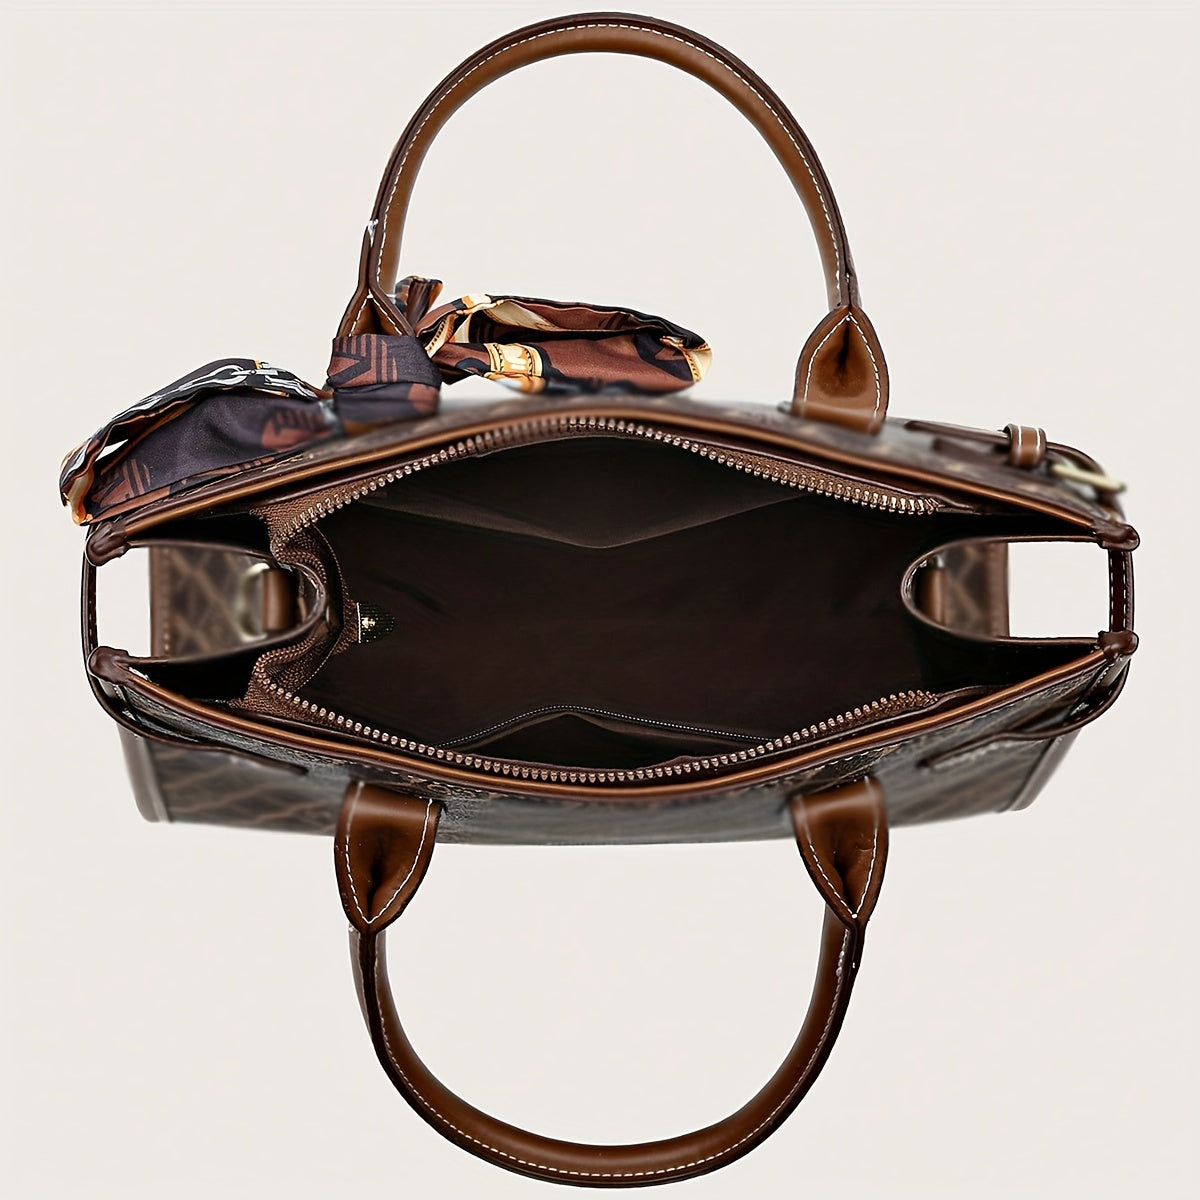 Women's 3 Pcs Classic Elegant Bag Set : Retro Geometric Pattern Tote Bag With Scarf Decor, Buckle Decor Square Purse & Credit Card Case